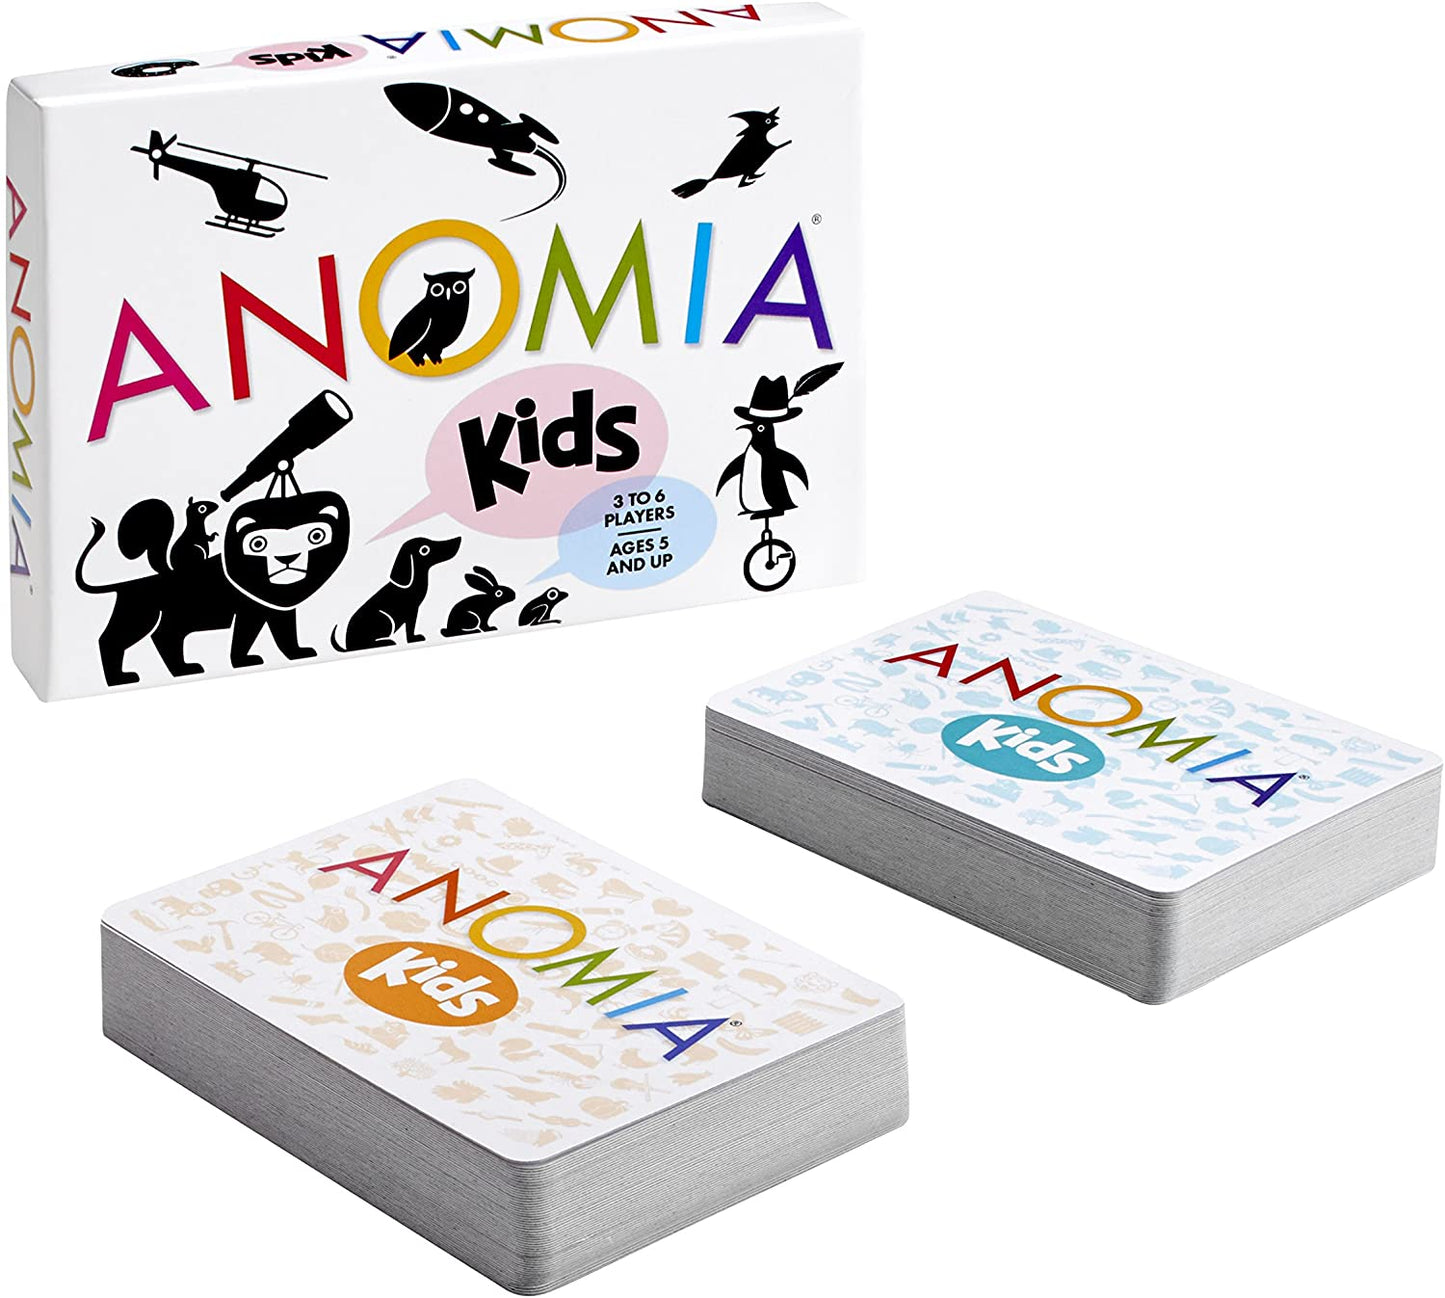 Anomia Kids Children's Card Game